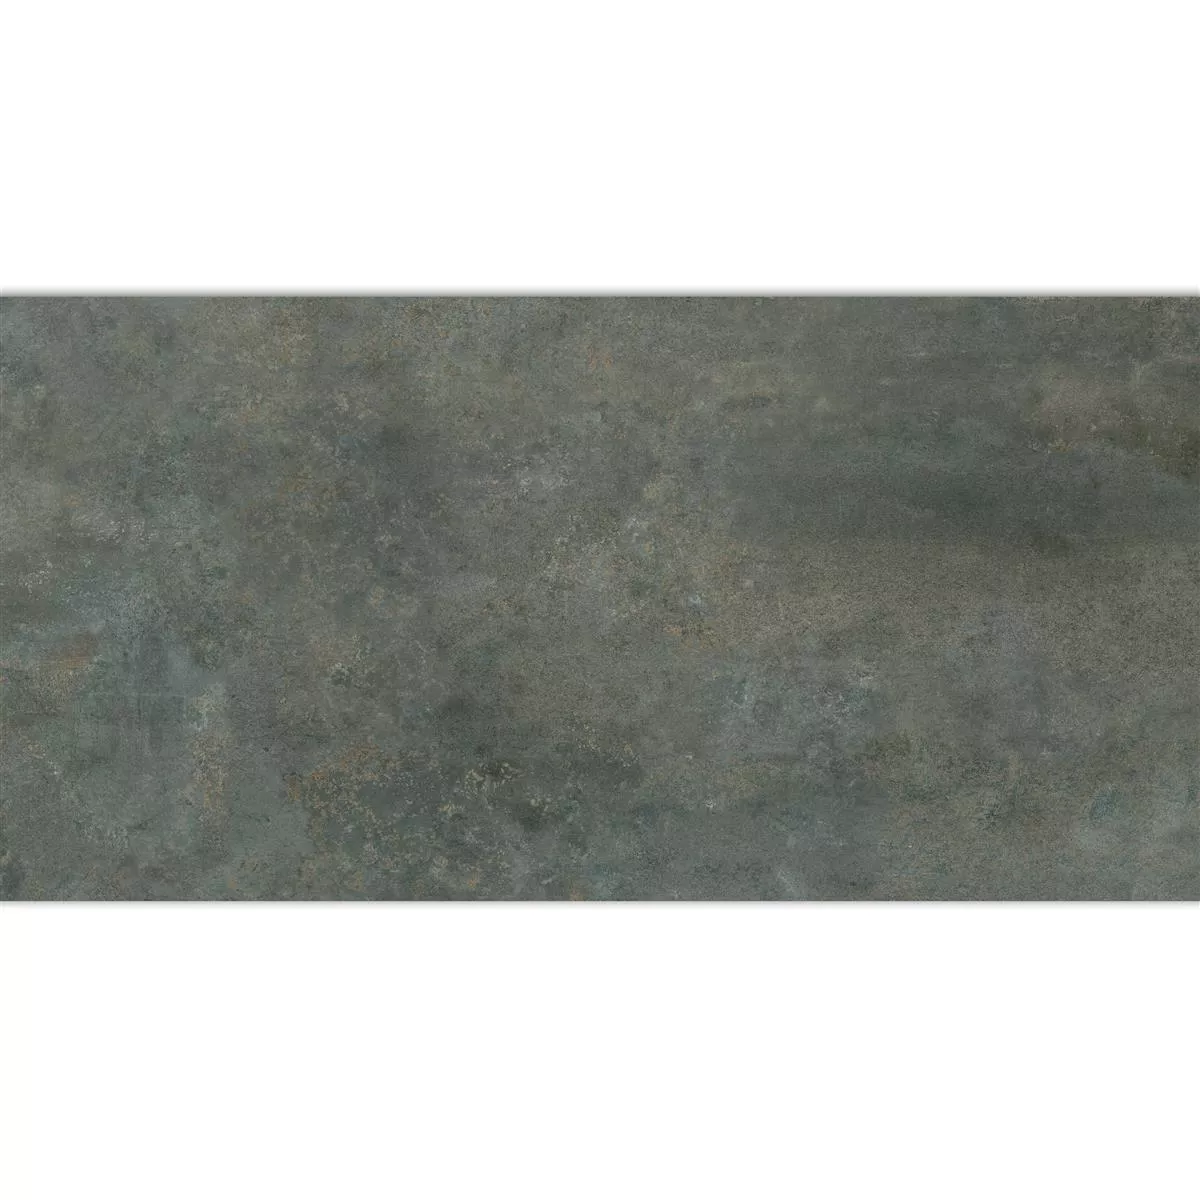 Подова Плочка Illusion Метален Вид Lappato Cтоманено Cиво 30x60cm